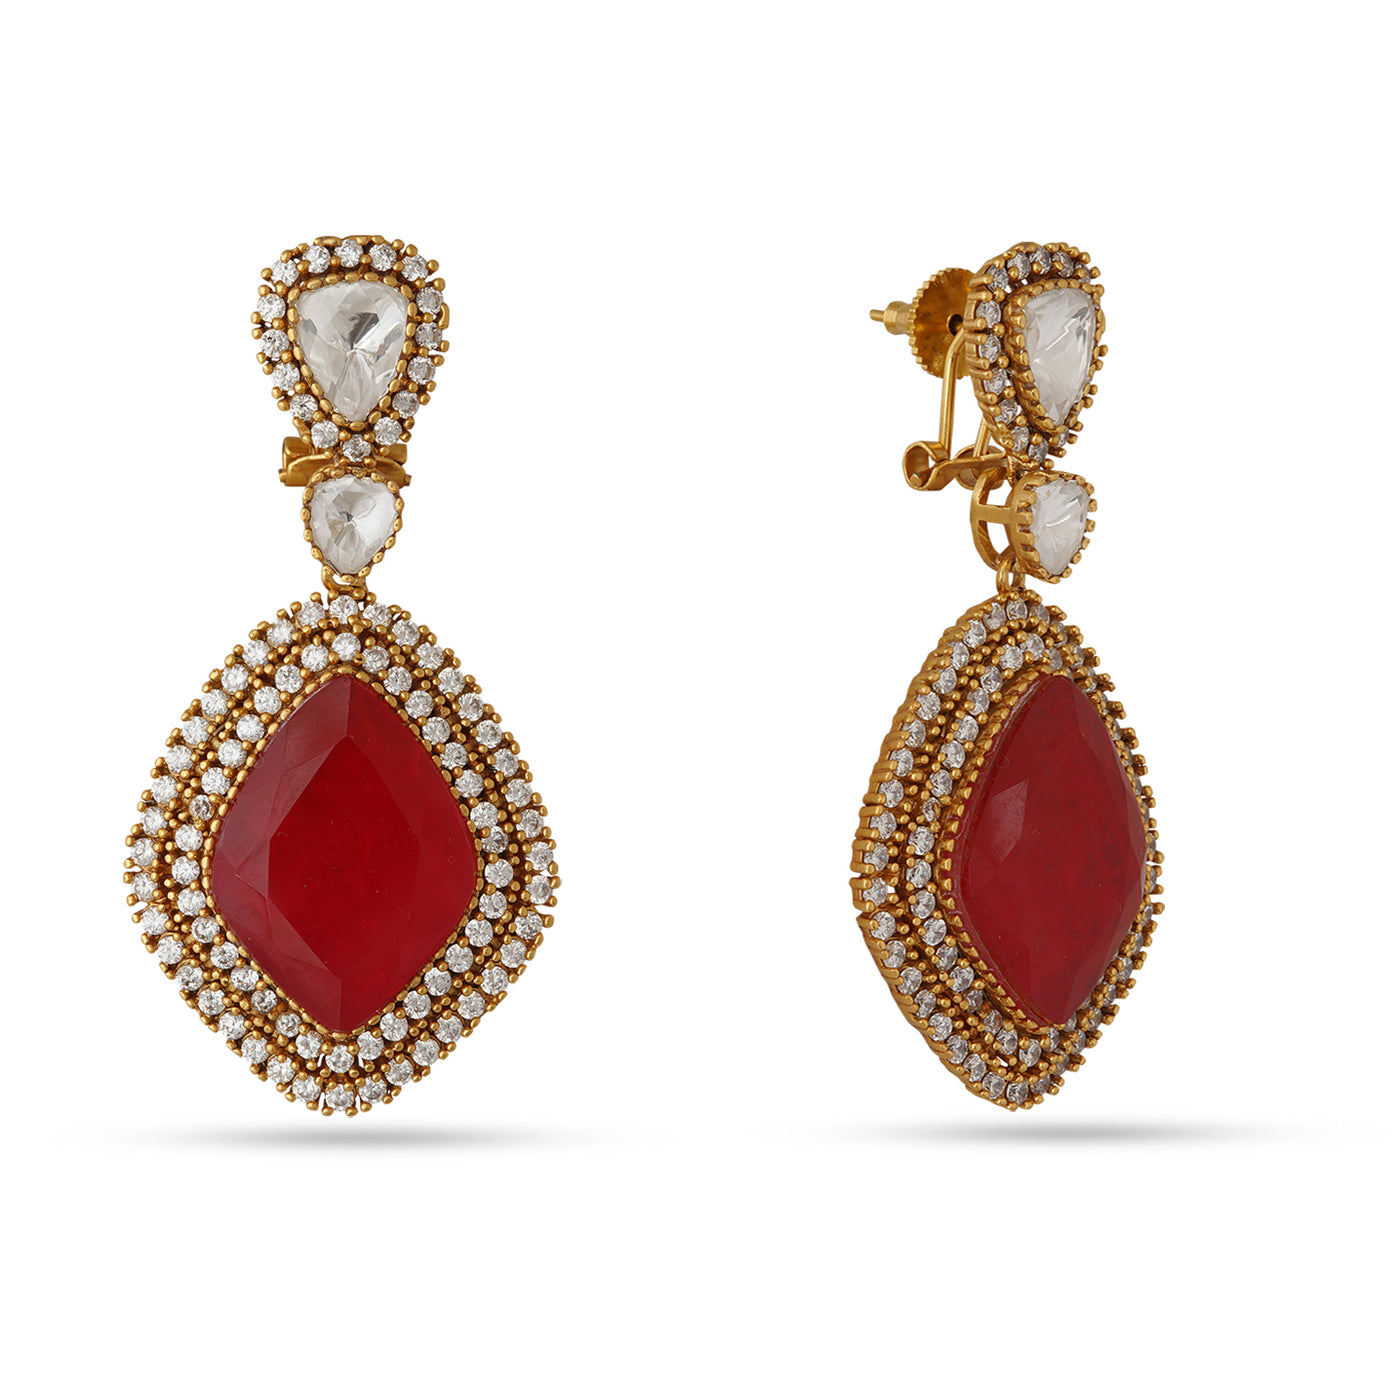 Hadeeqah - Red stone and polki earrings